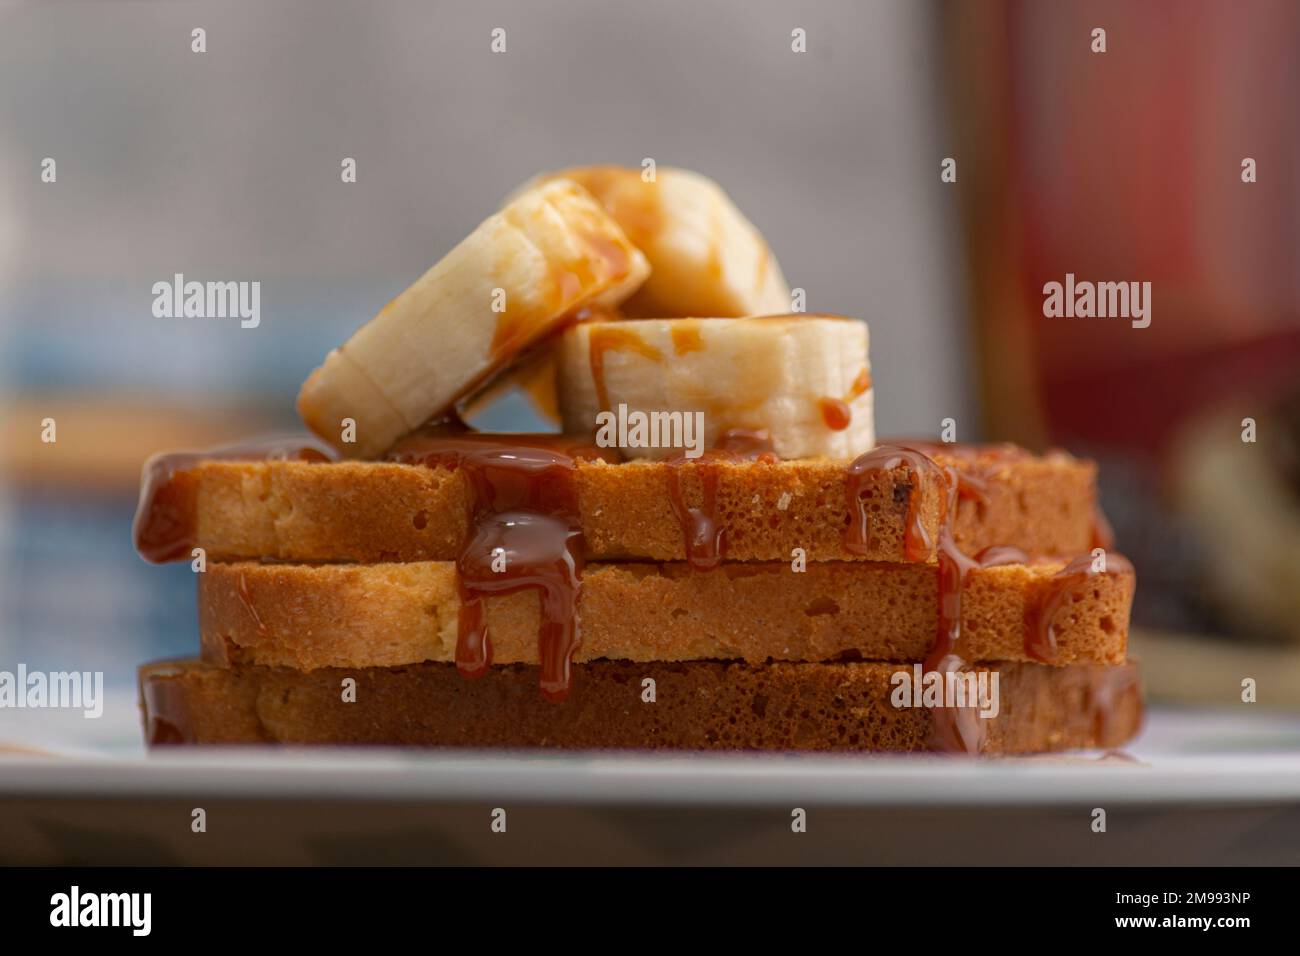 close up of toasted bread with cajeta and banana. Stock Photo